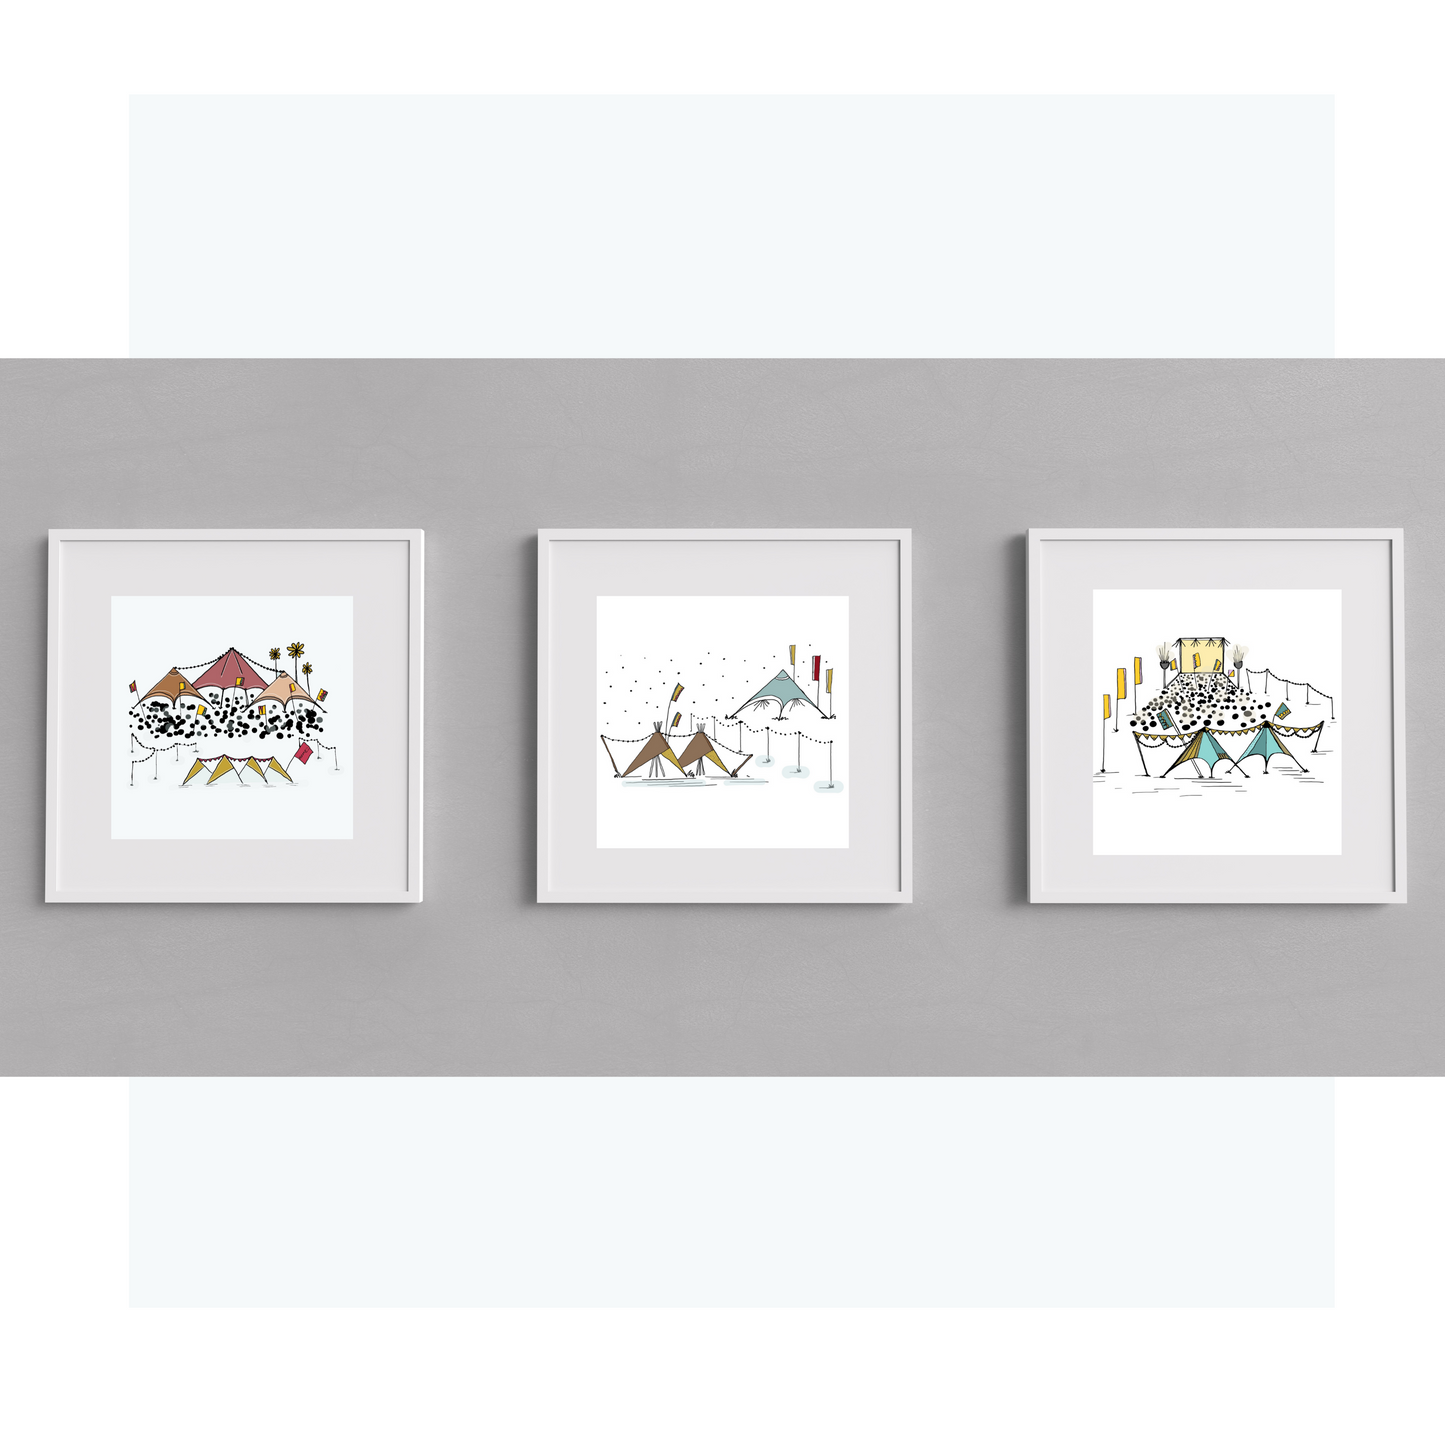 Festival inspired illustrations - set of three art prints